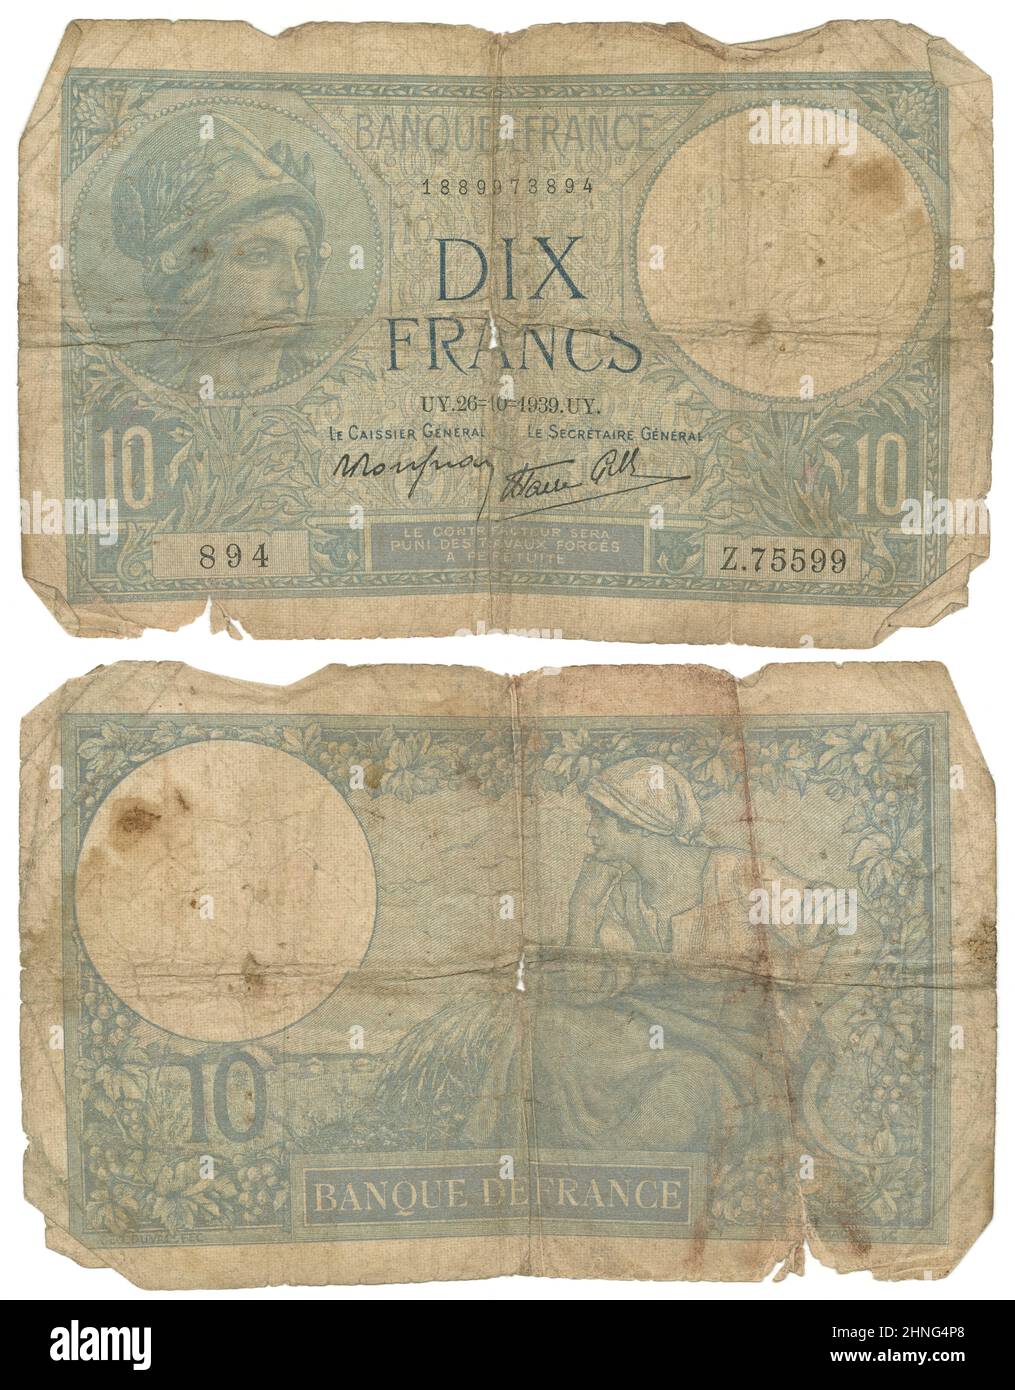 1939, nota dieci franchi, Francia, obverse e reverse. Dimensioni effettive: 137mm x 86mm. Foto Stock